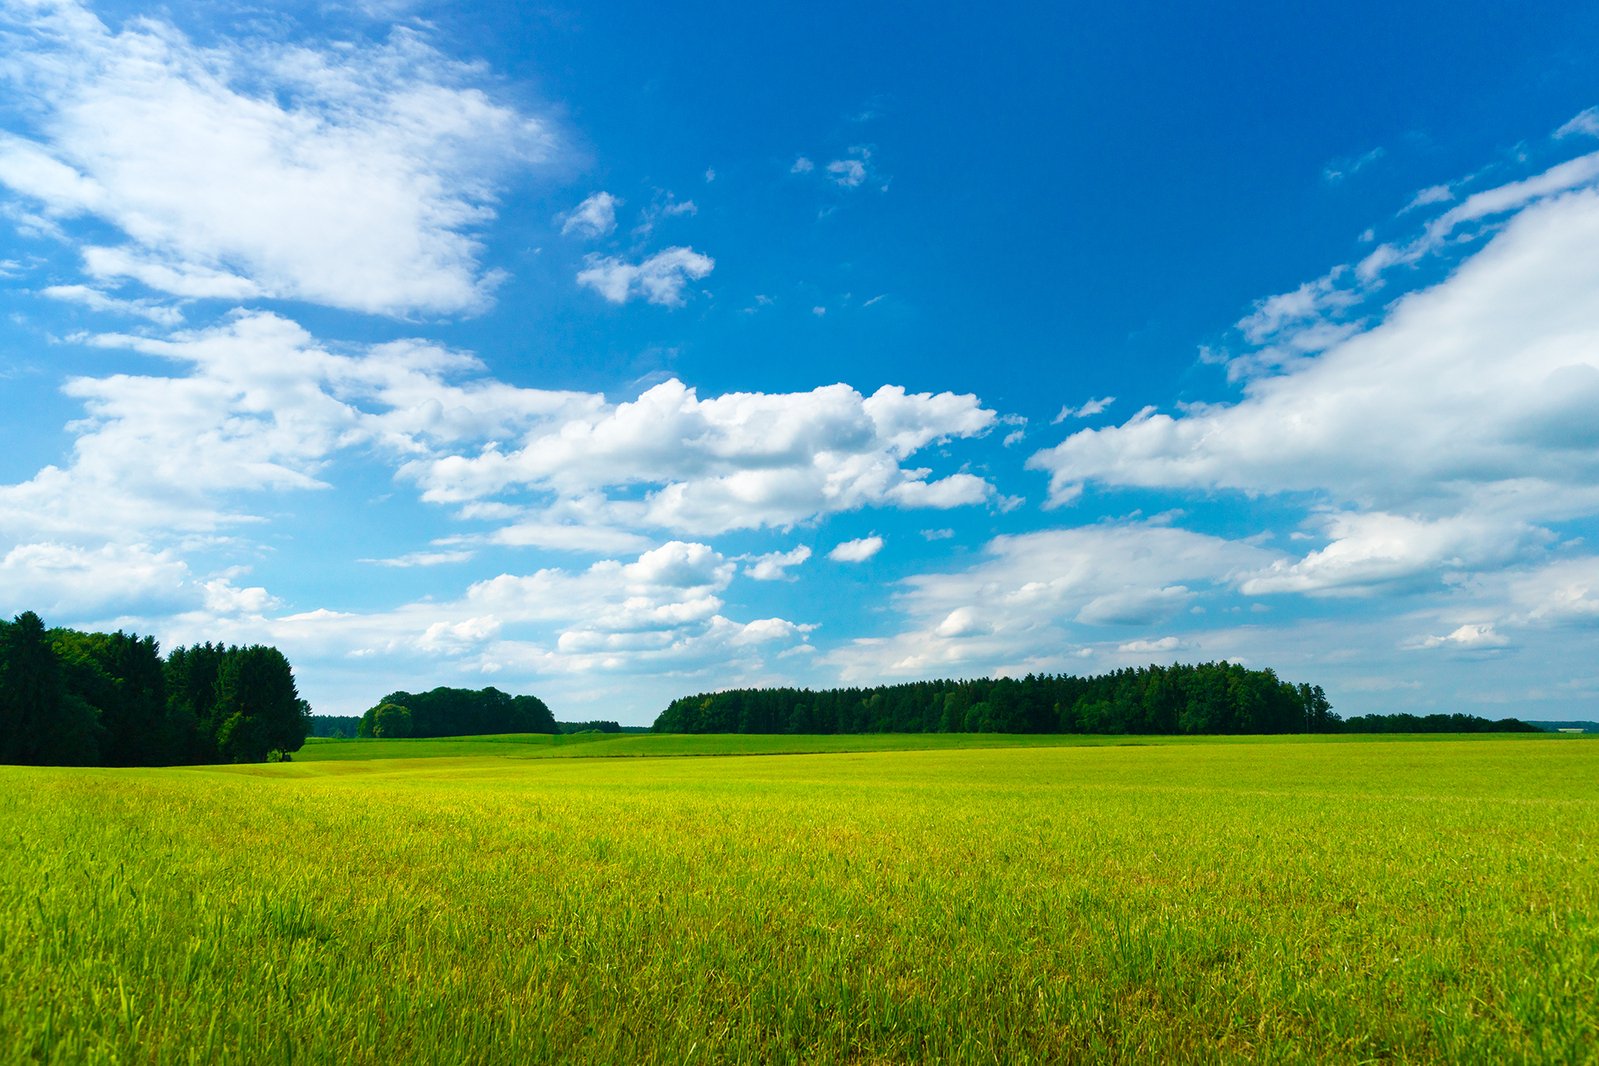 a lush green field sitting under a blue cloudy sky